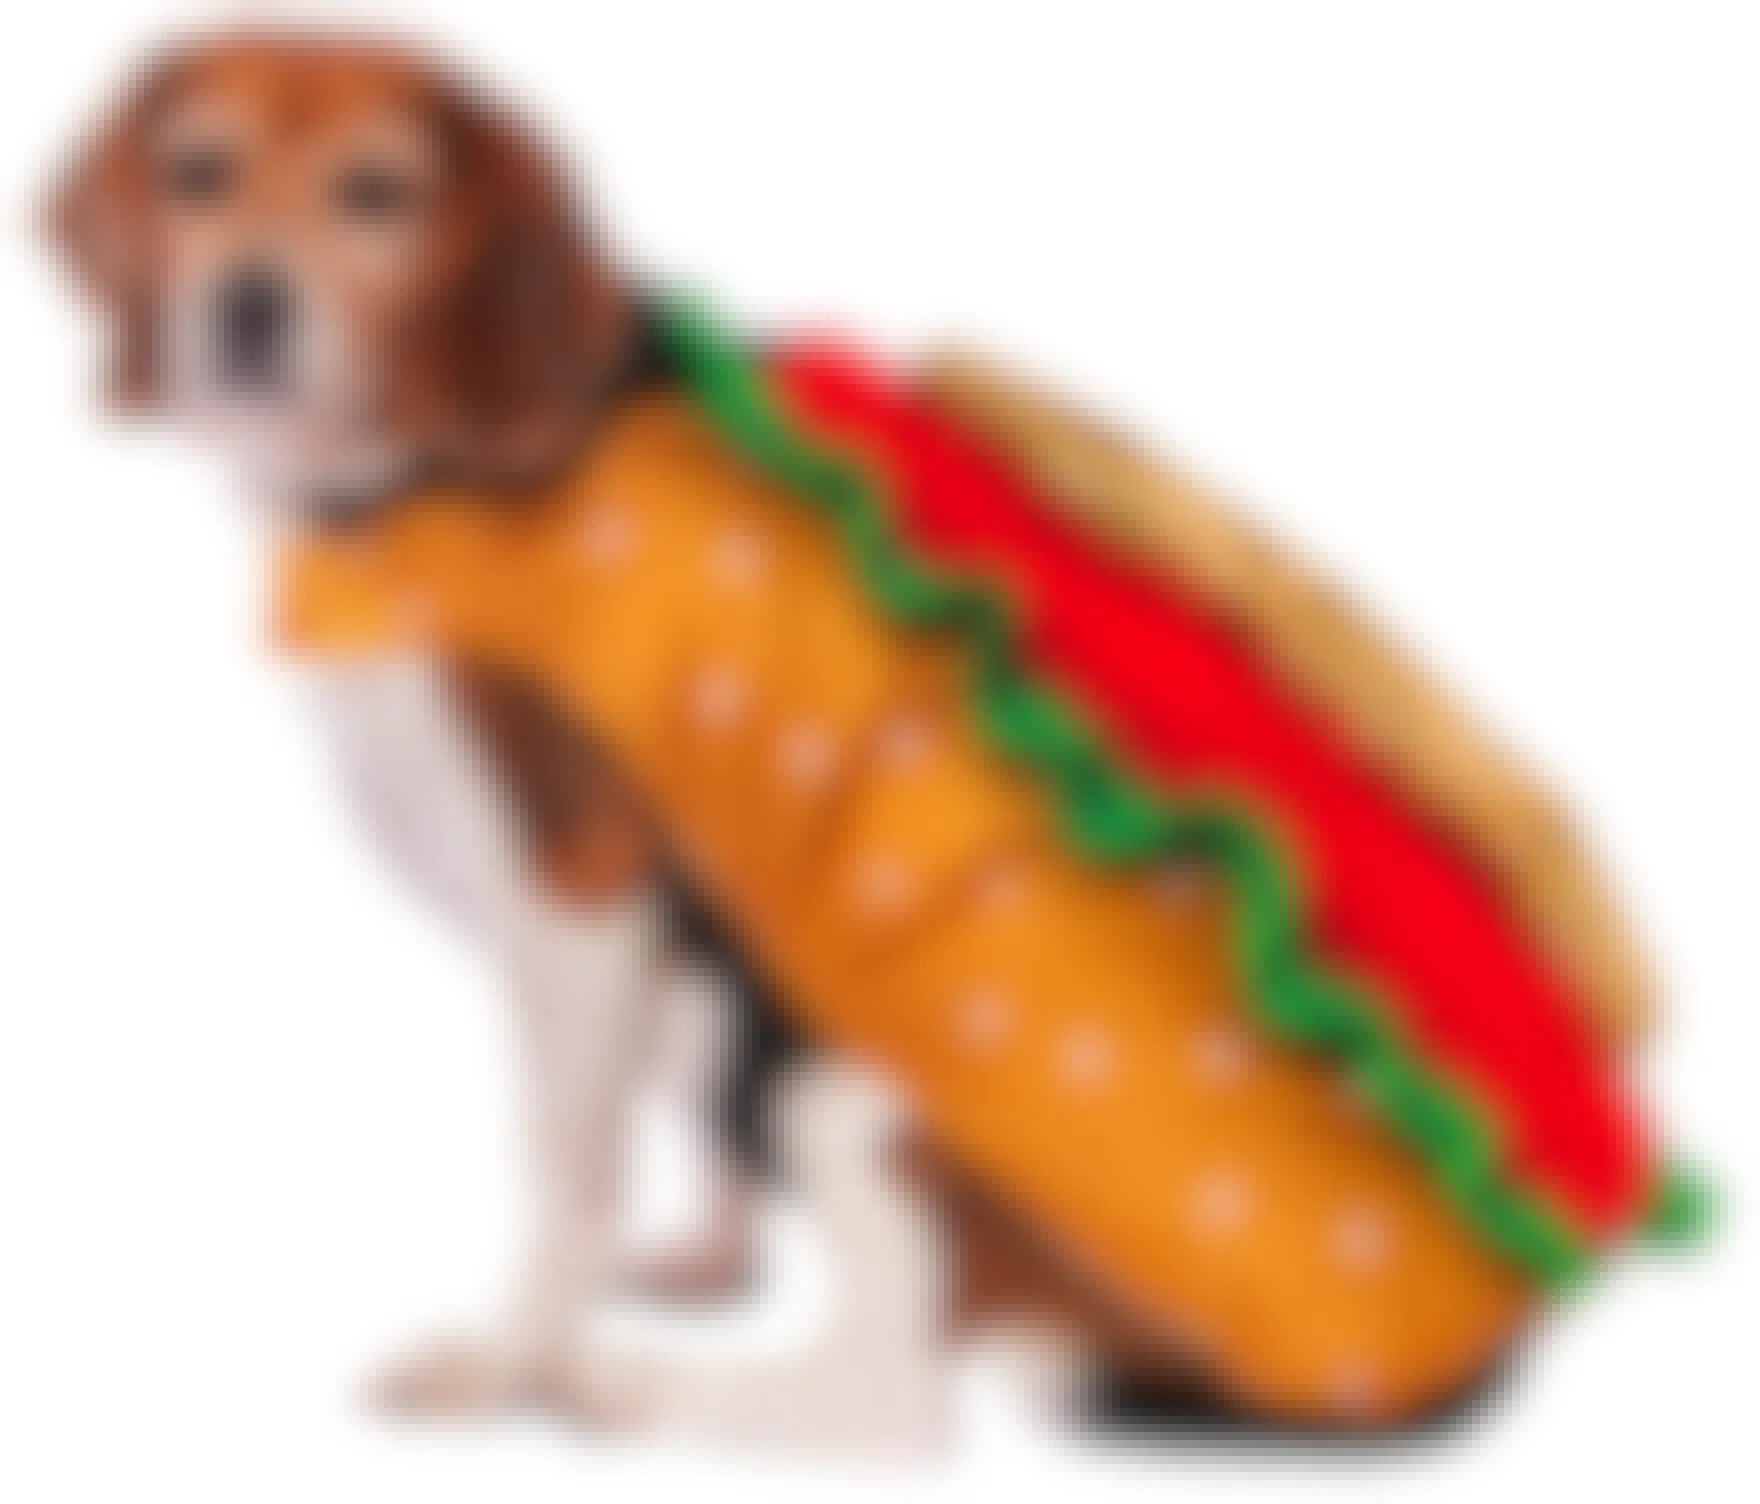 A dog wearing a hotdog costume on a white background